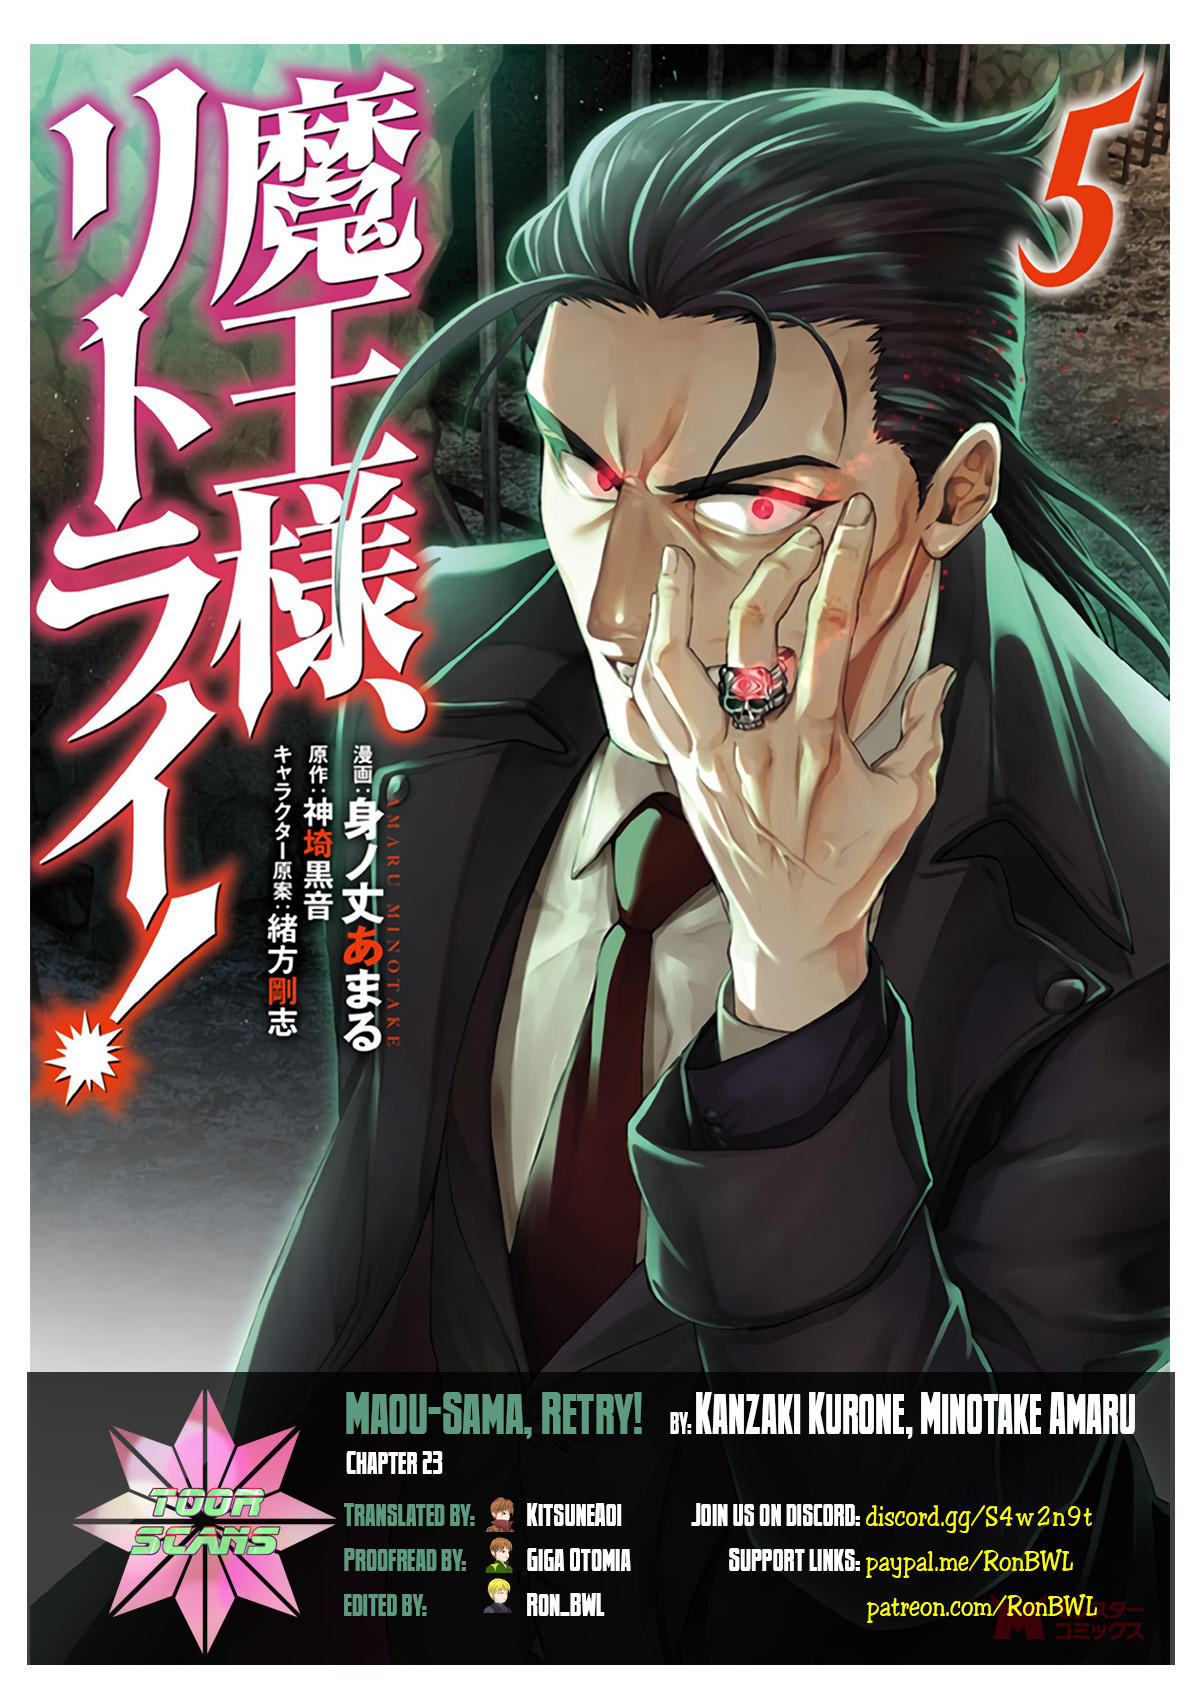 Manga Volume 01, Demon Lord, Retry! Wiki